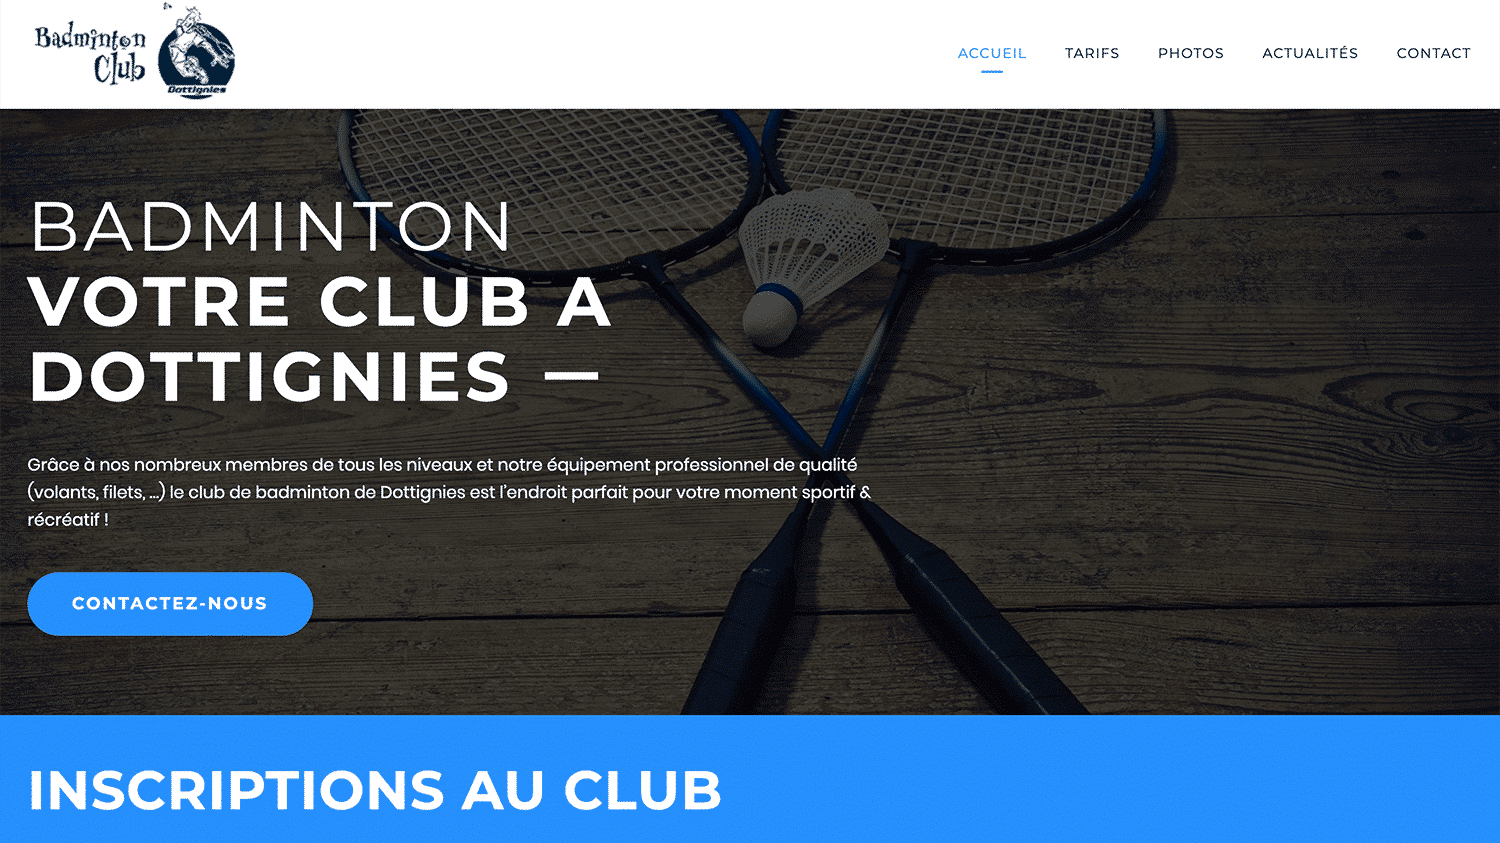 Badminton Club référence plein écran